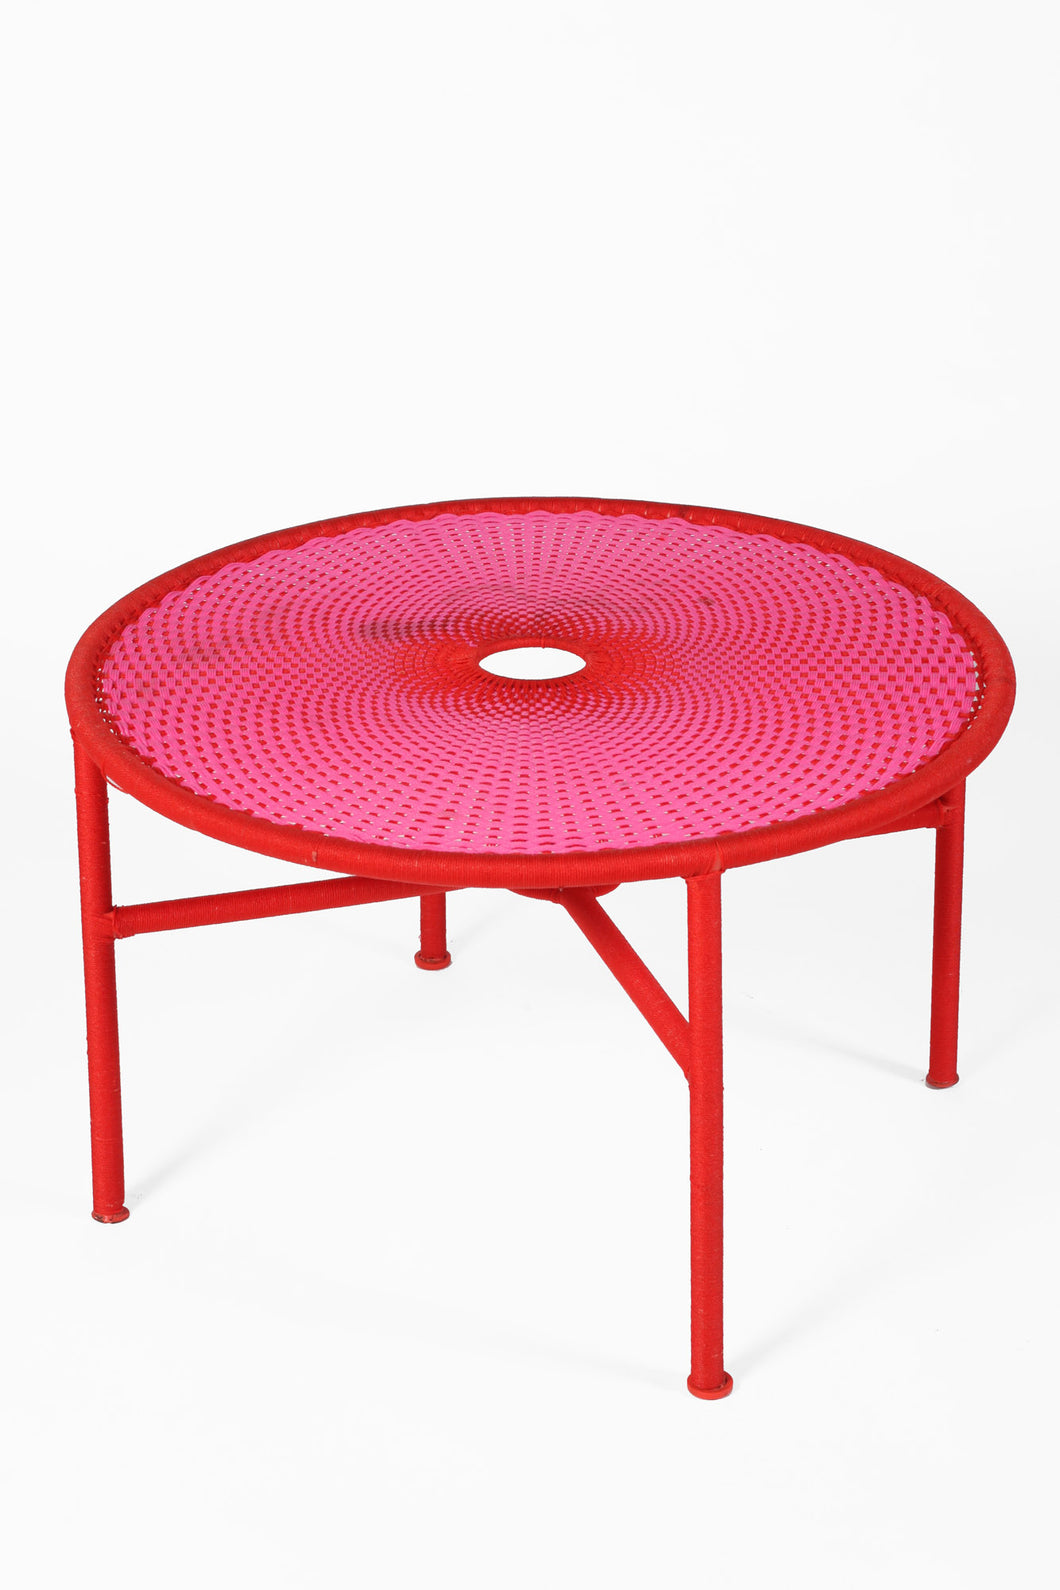 Sebastian Herkner Banjooli Medium Table (Pink/Red)